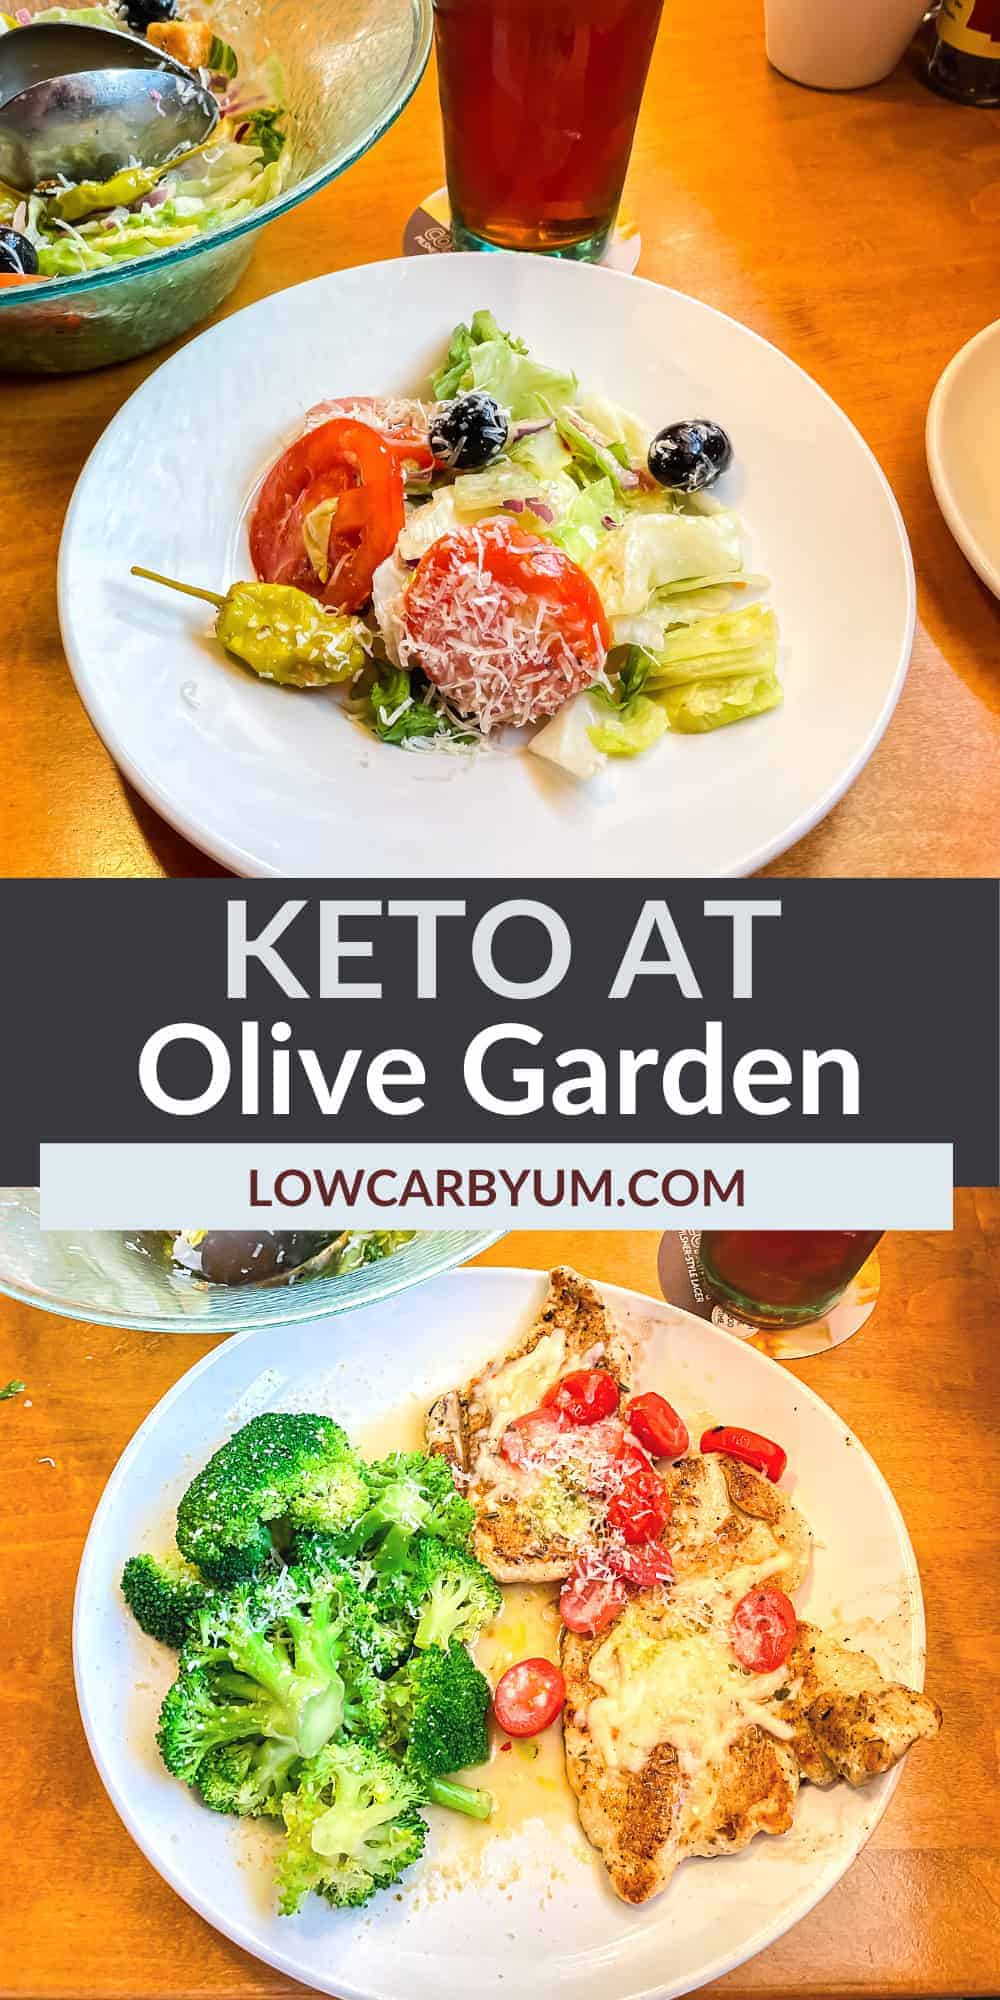 keto at olive garden pinterest image.